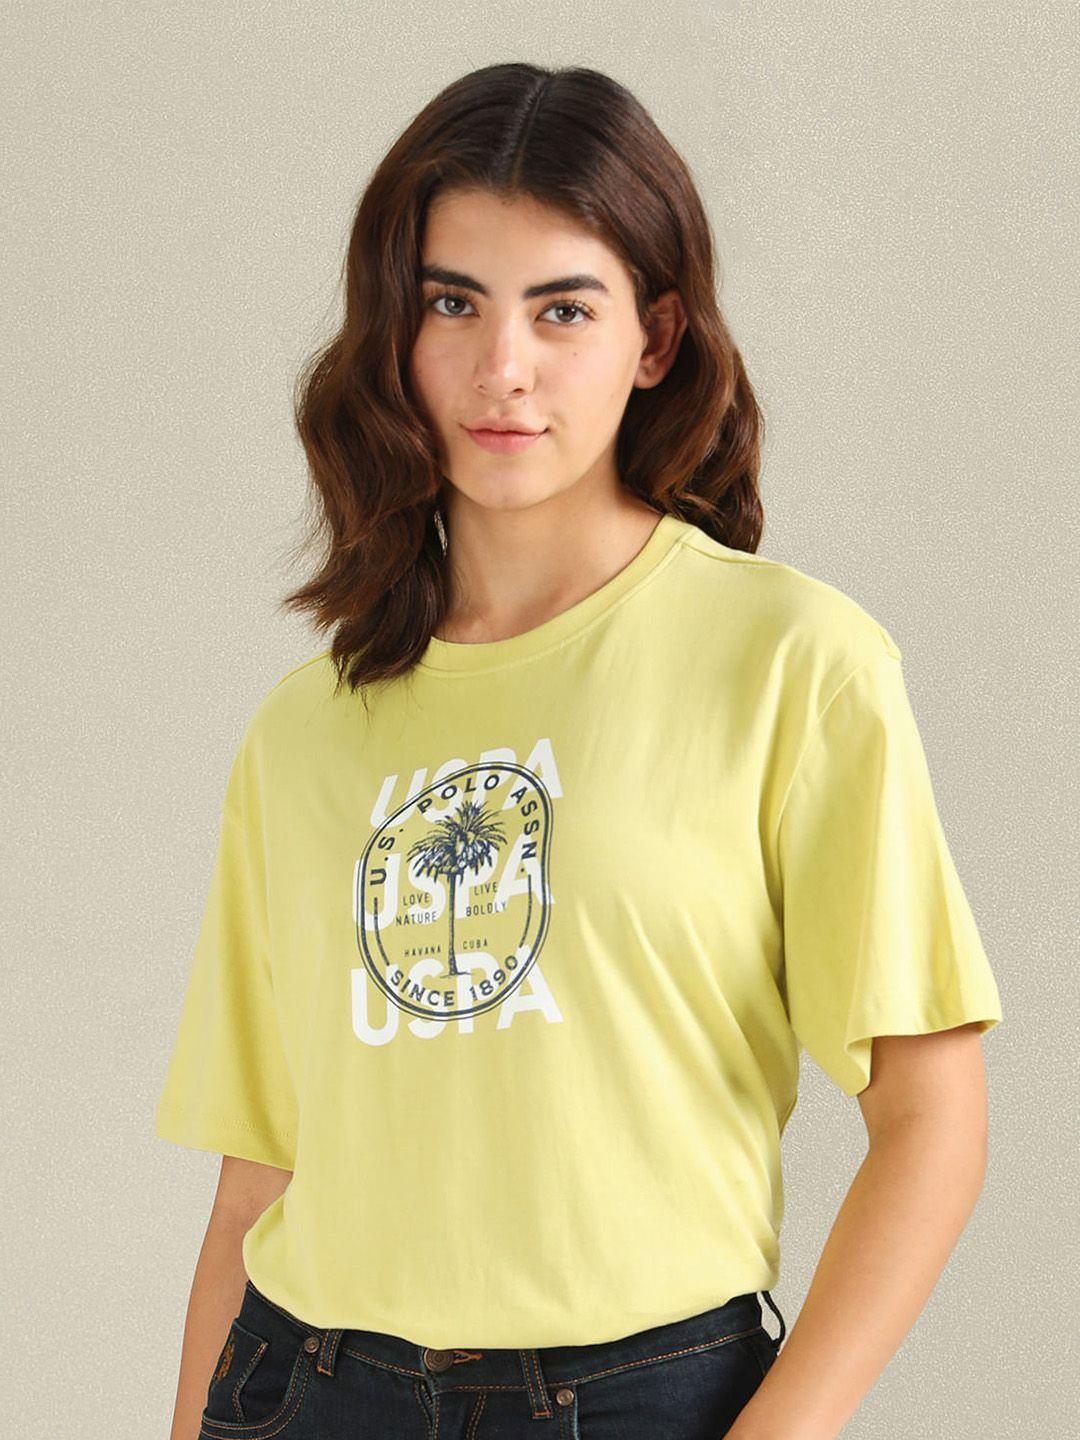 u.s. polo assn. women typography printed pure cotton t-shirt